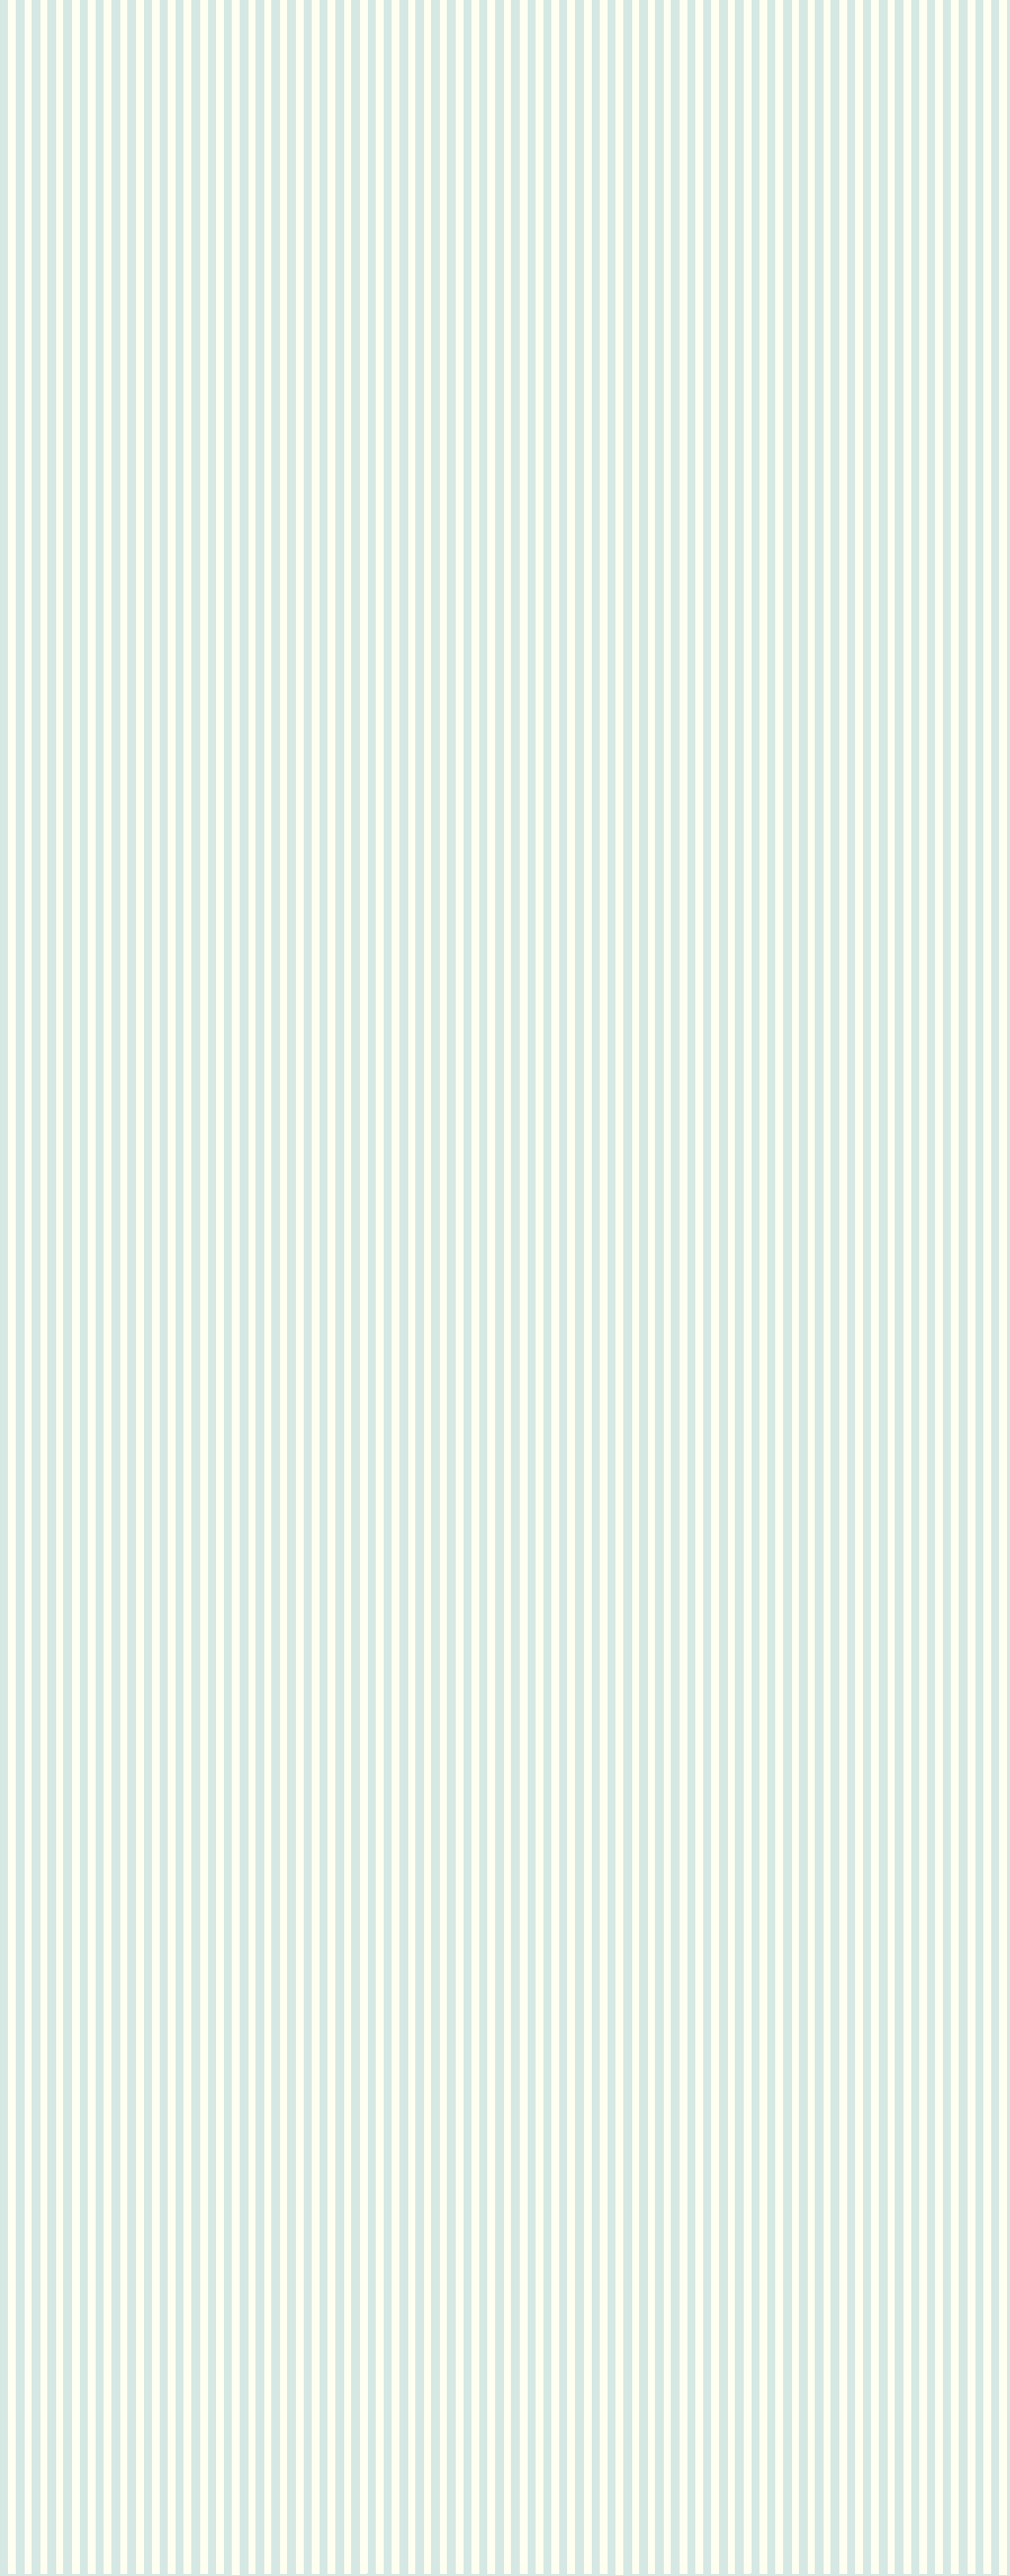 蓝白条纹 blue and white striped background by undeadzombiie